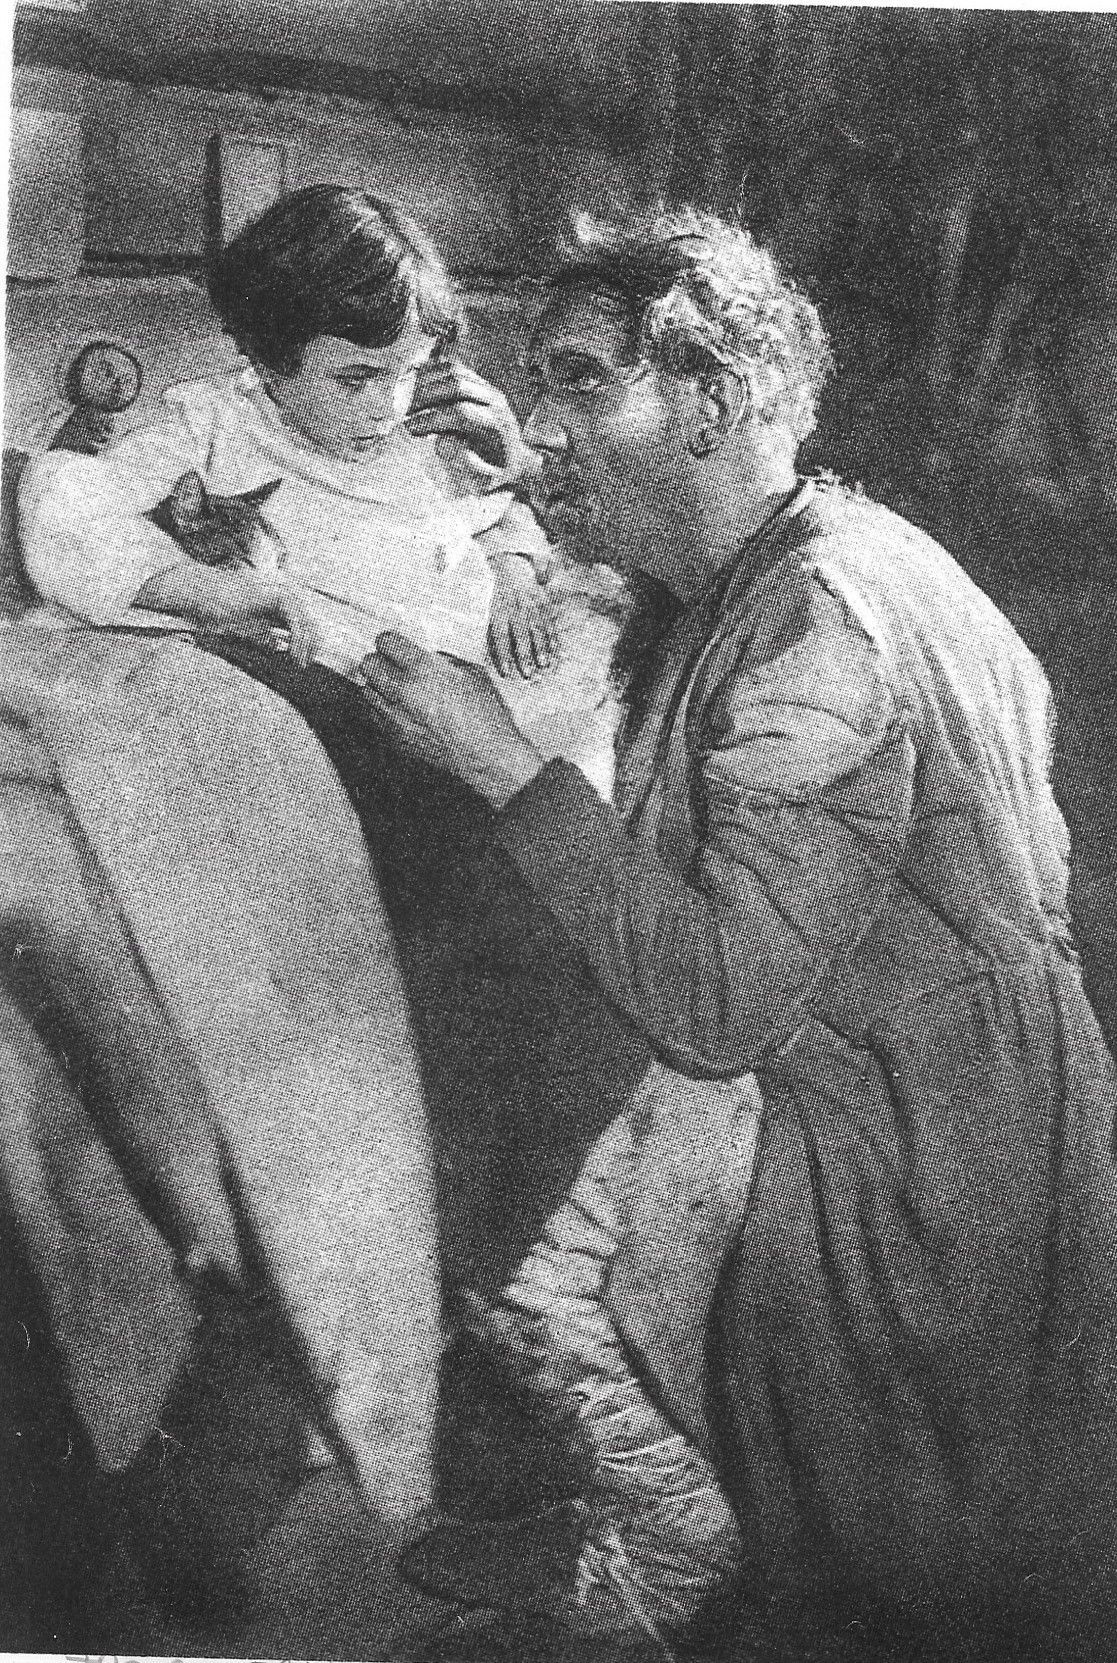 Pashka in Troika, 1930